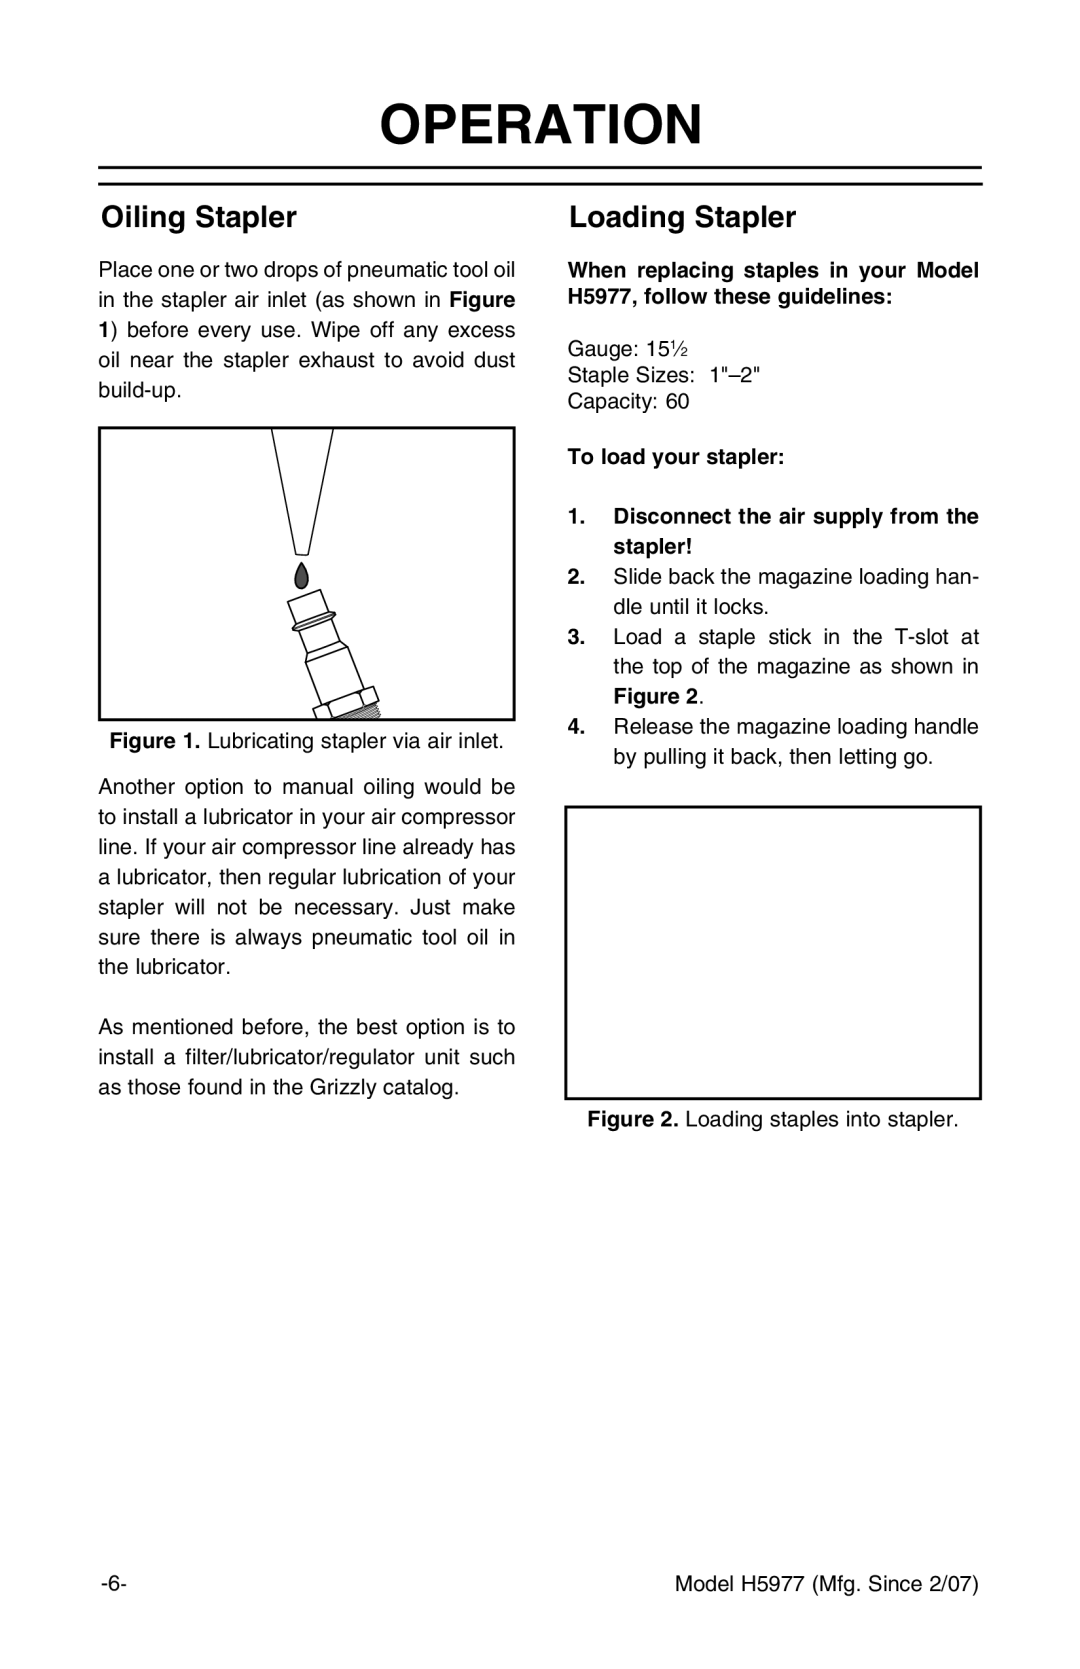 Grizzly H5977 instruction manual Oiling Stapler, Loading Stapler 